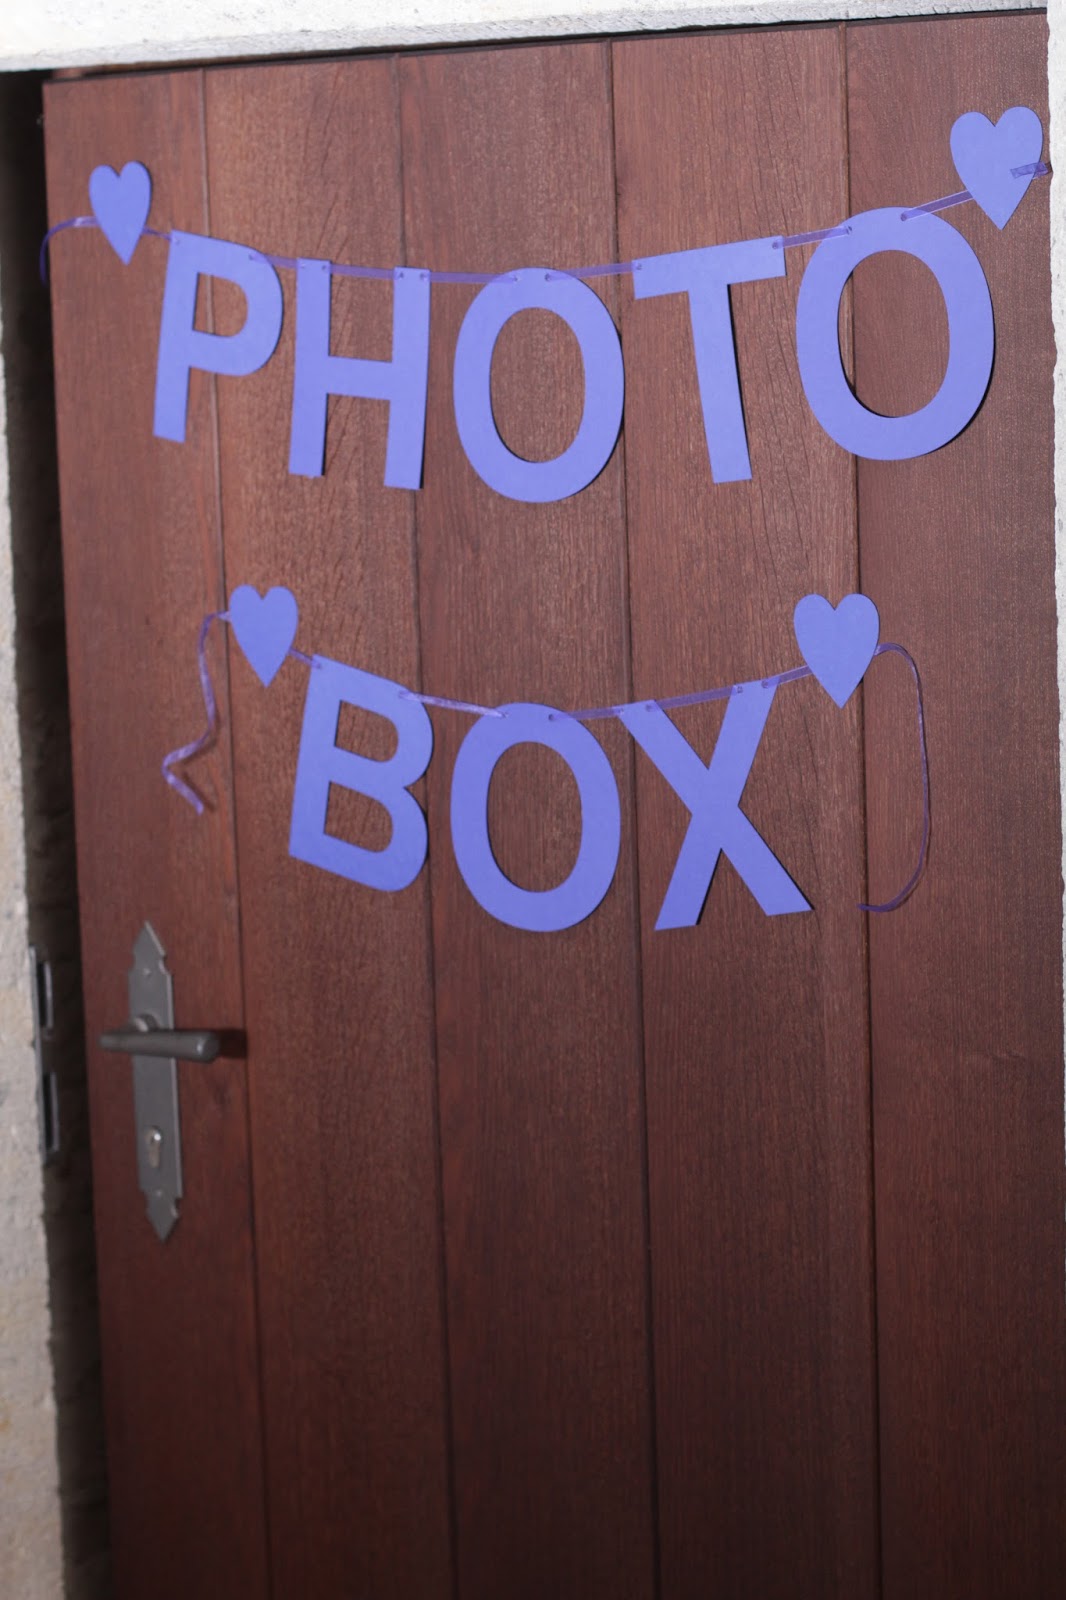 PhotoBooth photobox metterlink